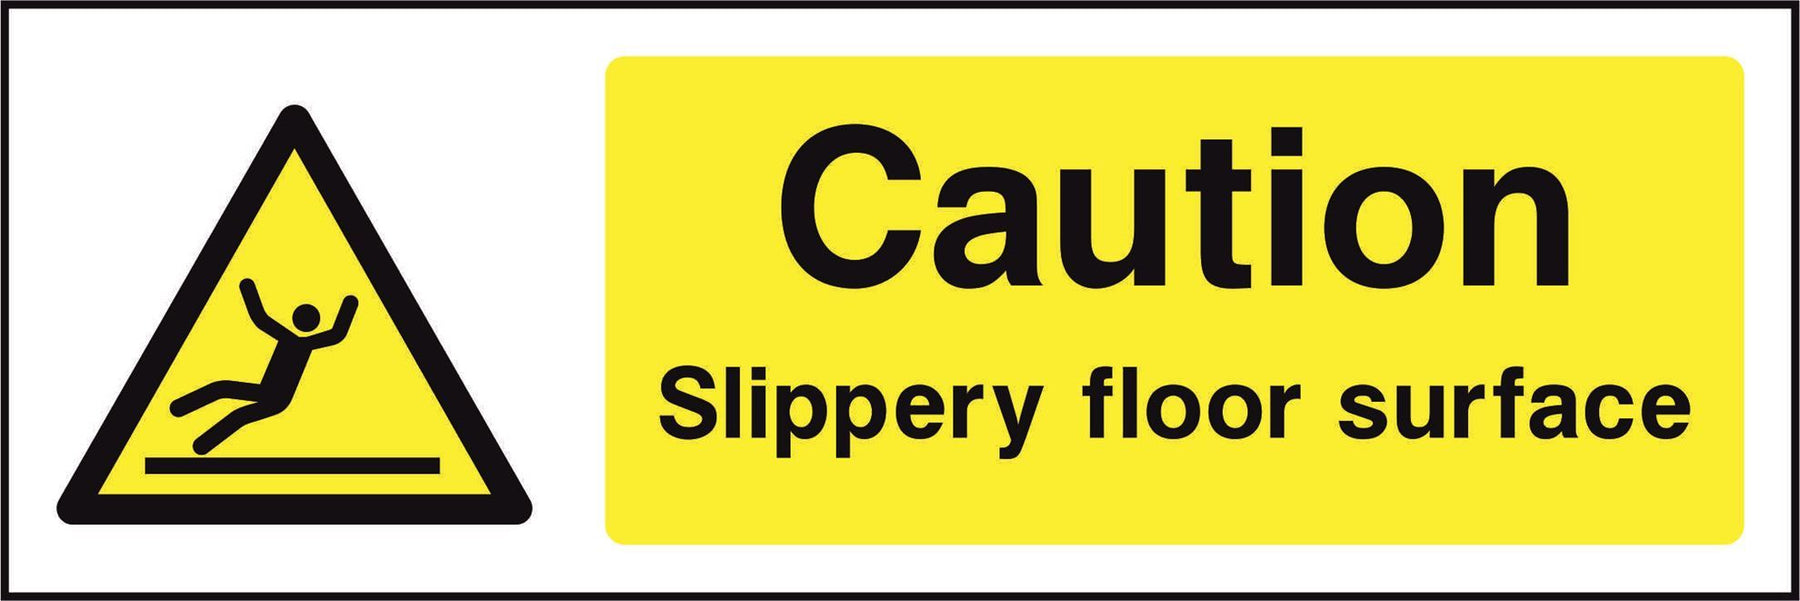 Caution Slippery floor surface